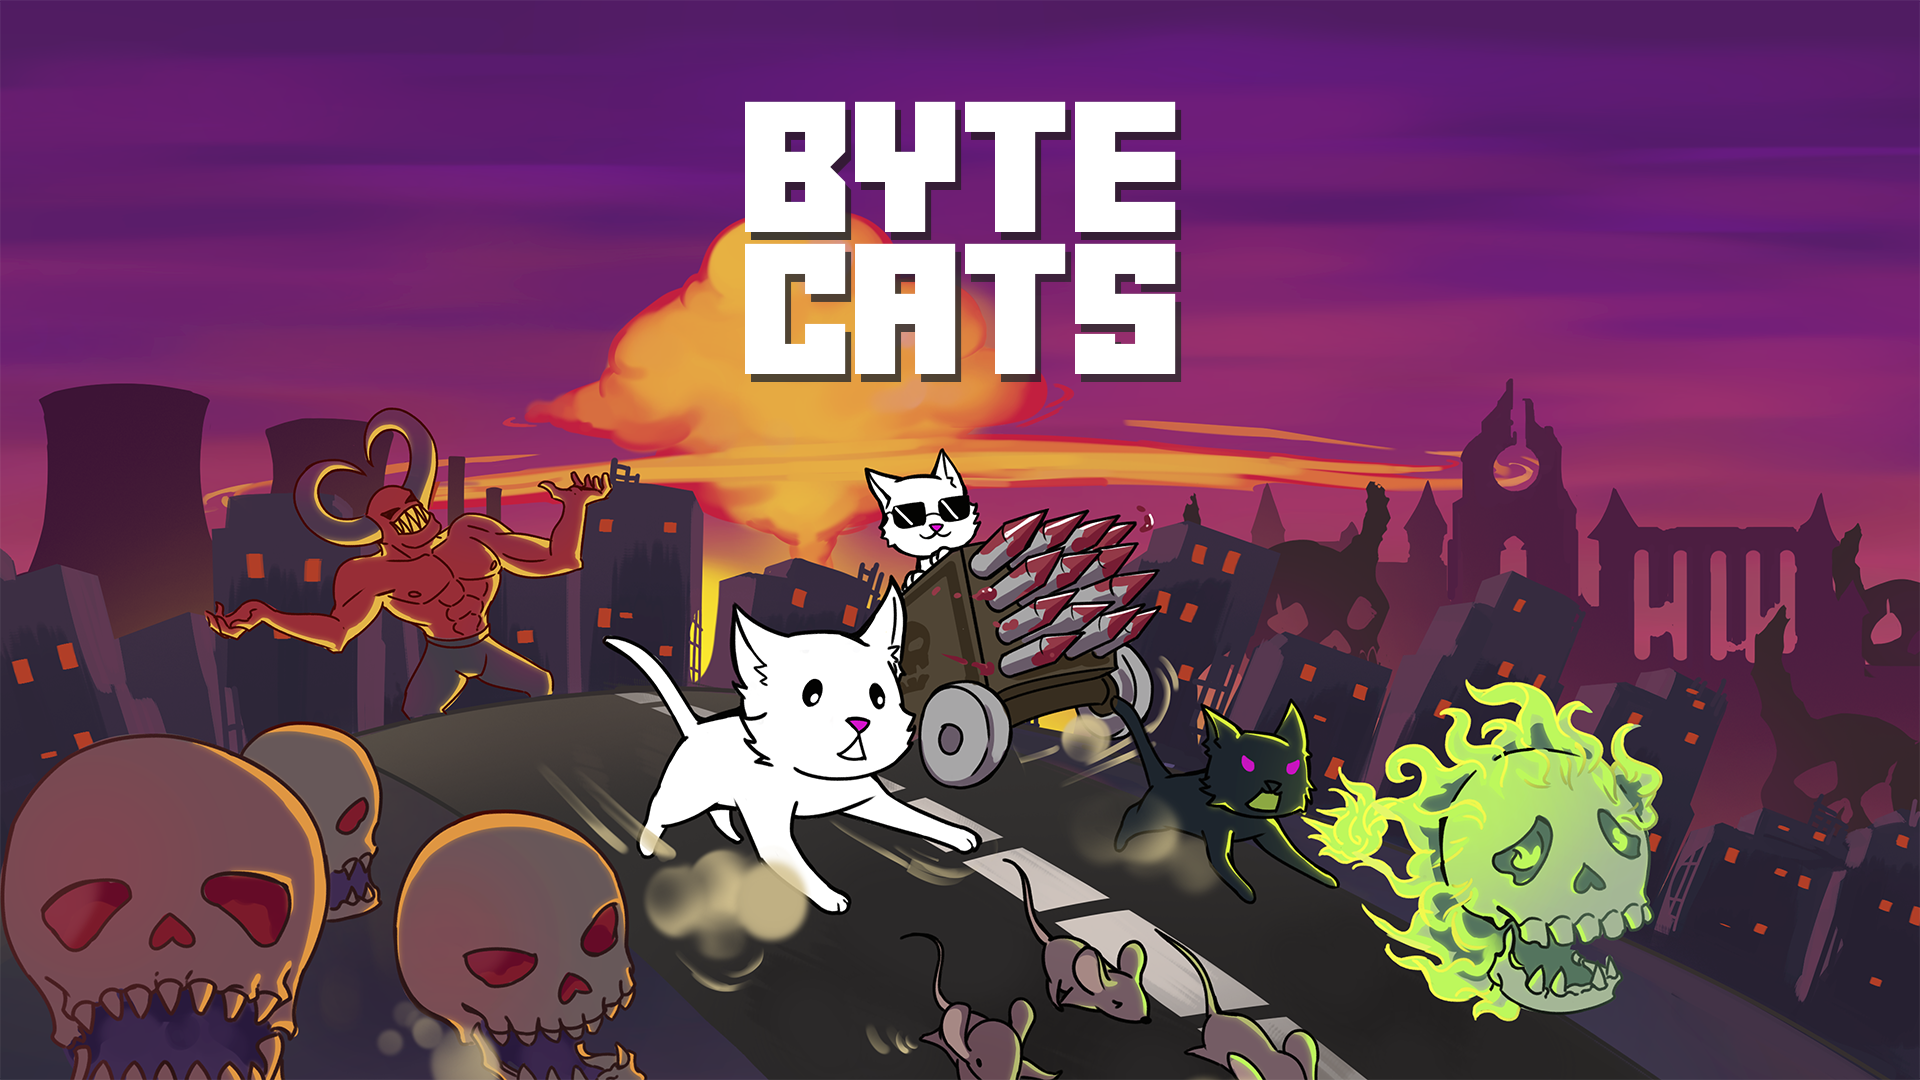 BYTE CATS